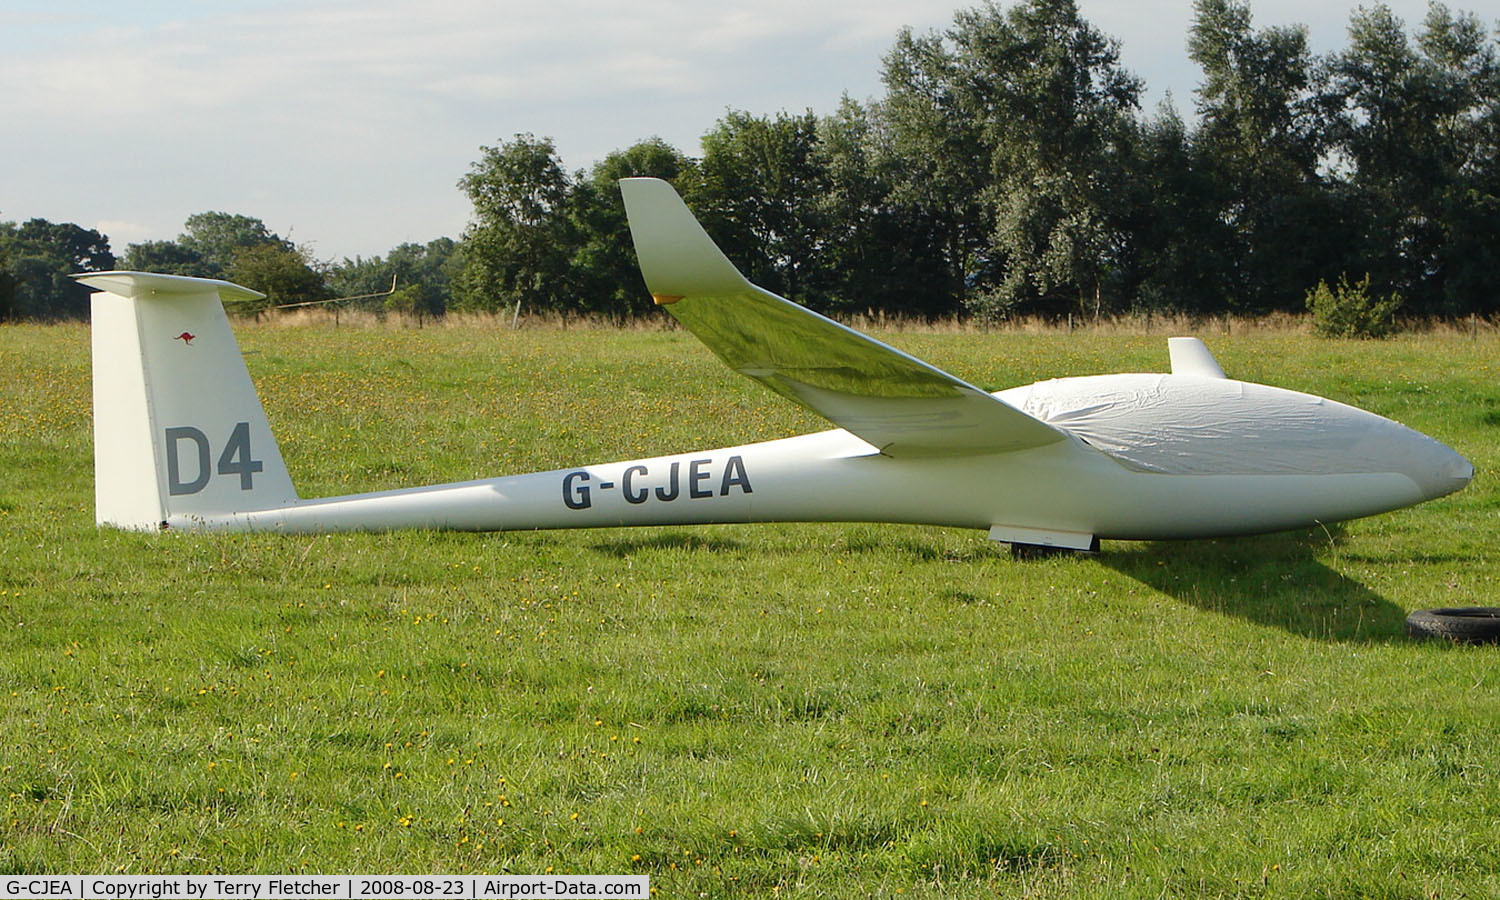 G-CJEA, 1998 Rolladen-Schneider LS-8-18 C/N 8159, Competitor in the Midland Regional Gliding Championship at Husband's Bosworth